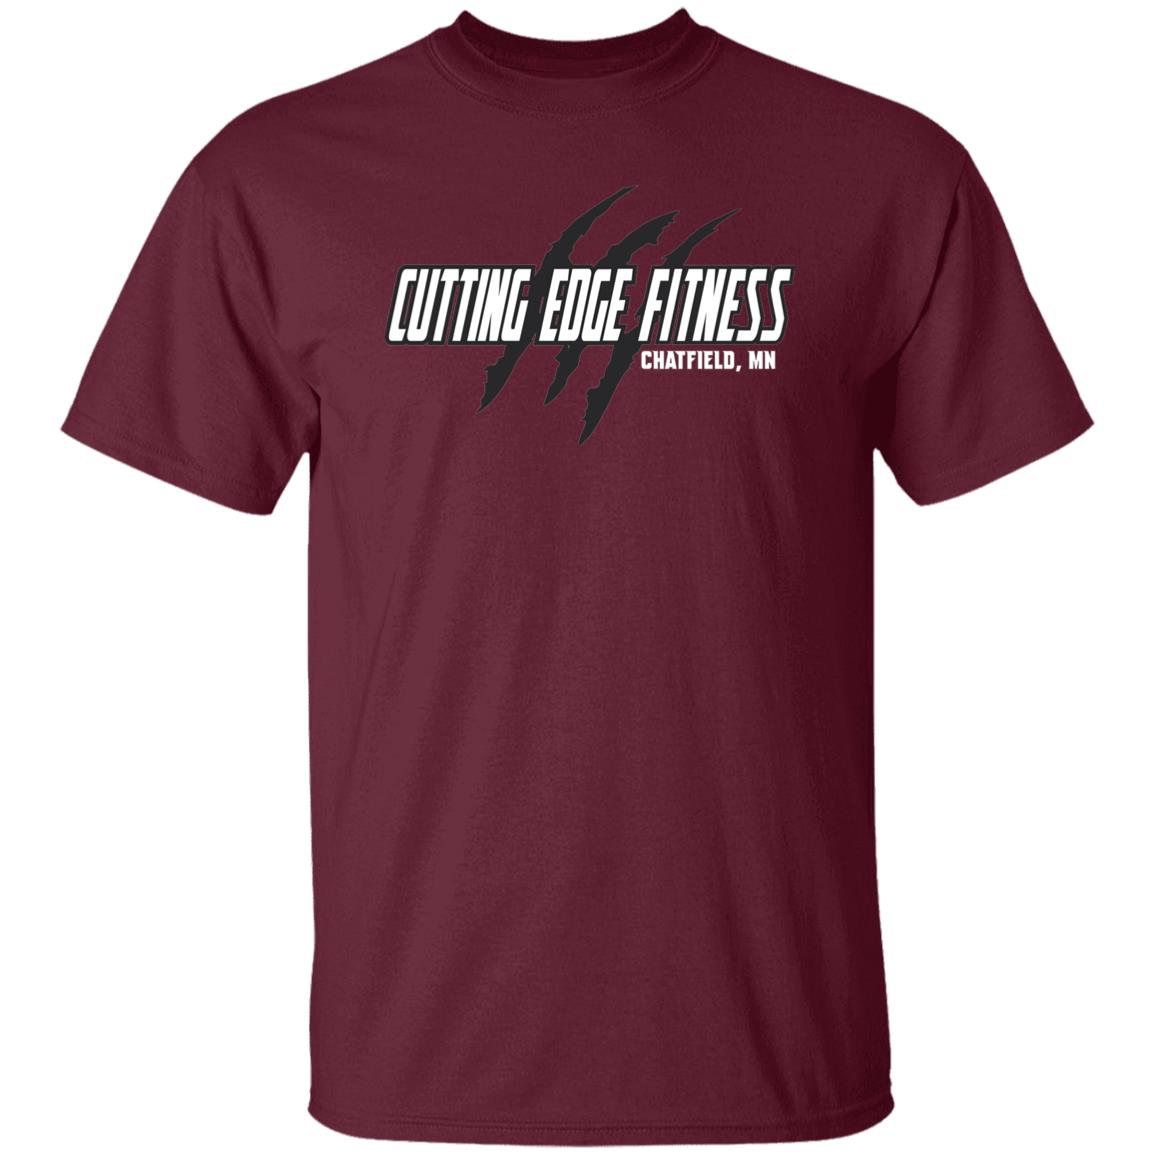 Men’s Jersey Style Established 2024 CEF-Chatfield Standard T-Shirt